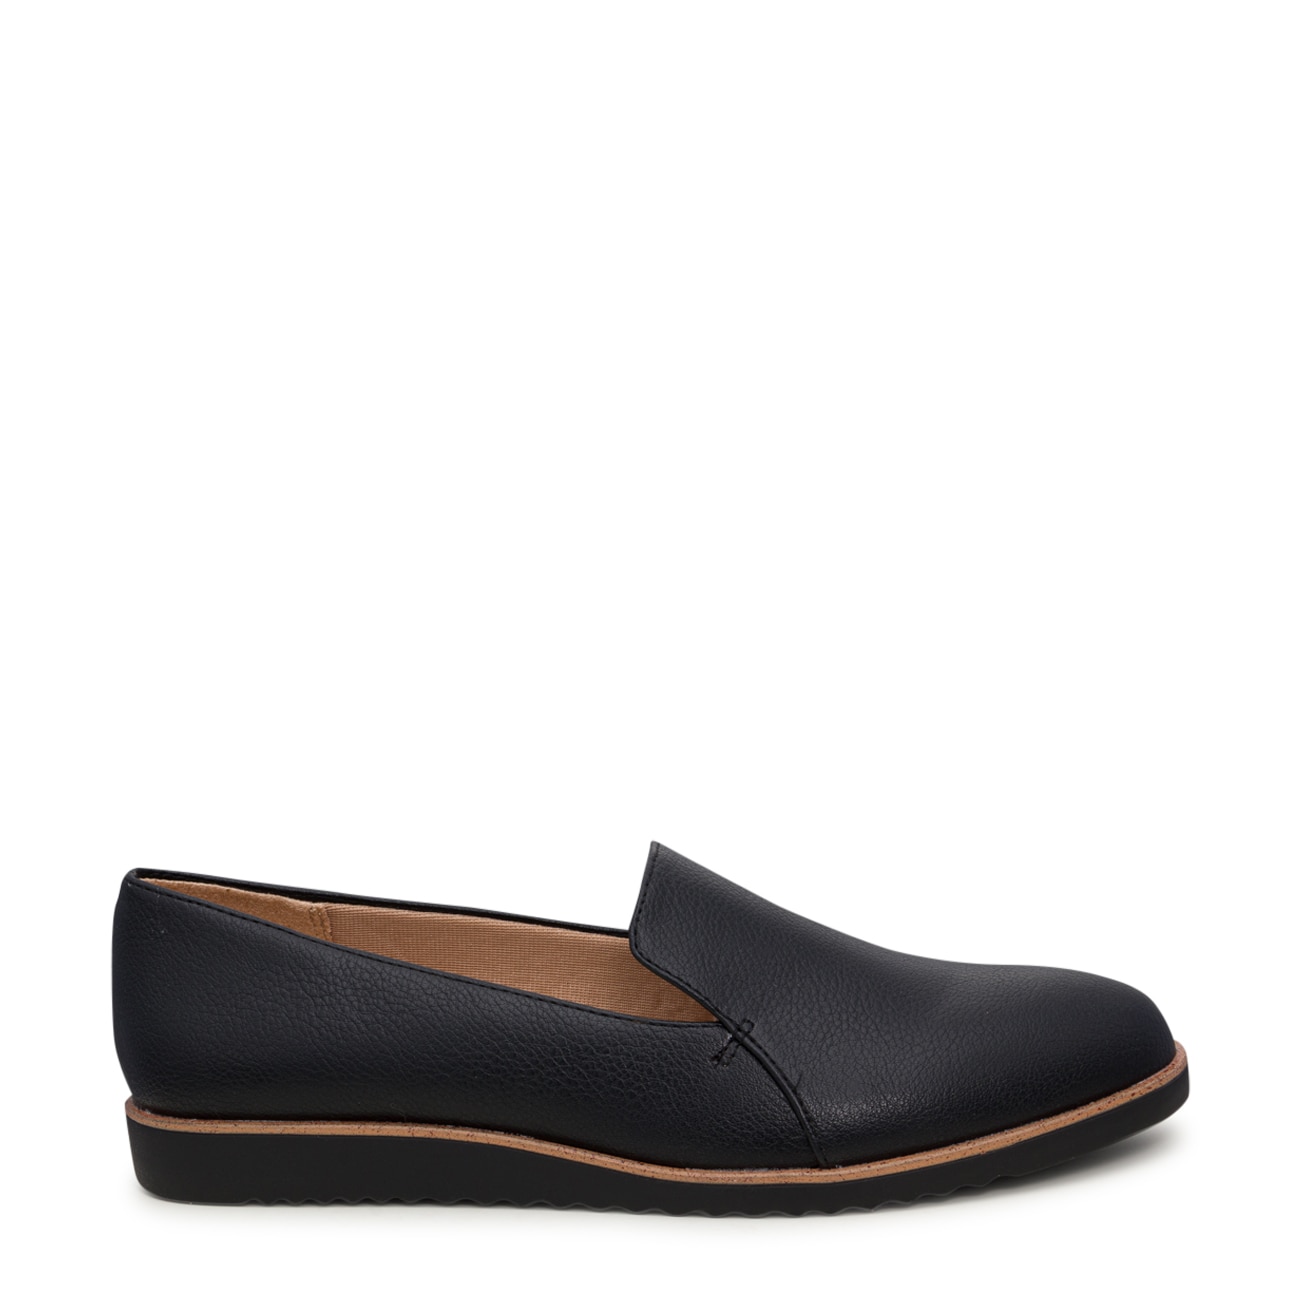 Lifestride Zendaya Loafer | The Shoe Company